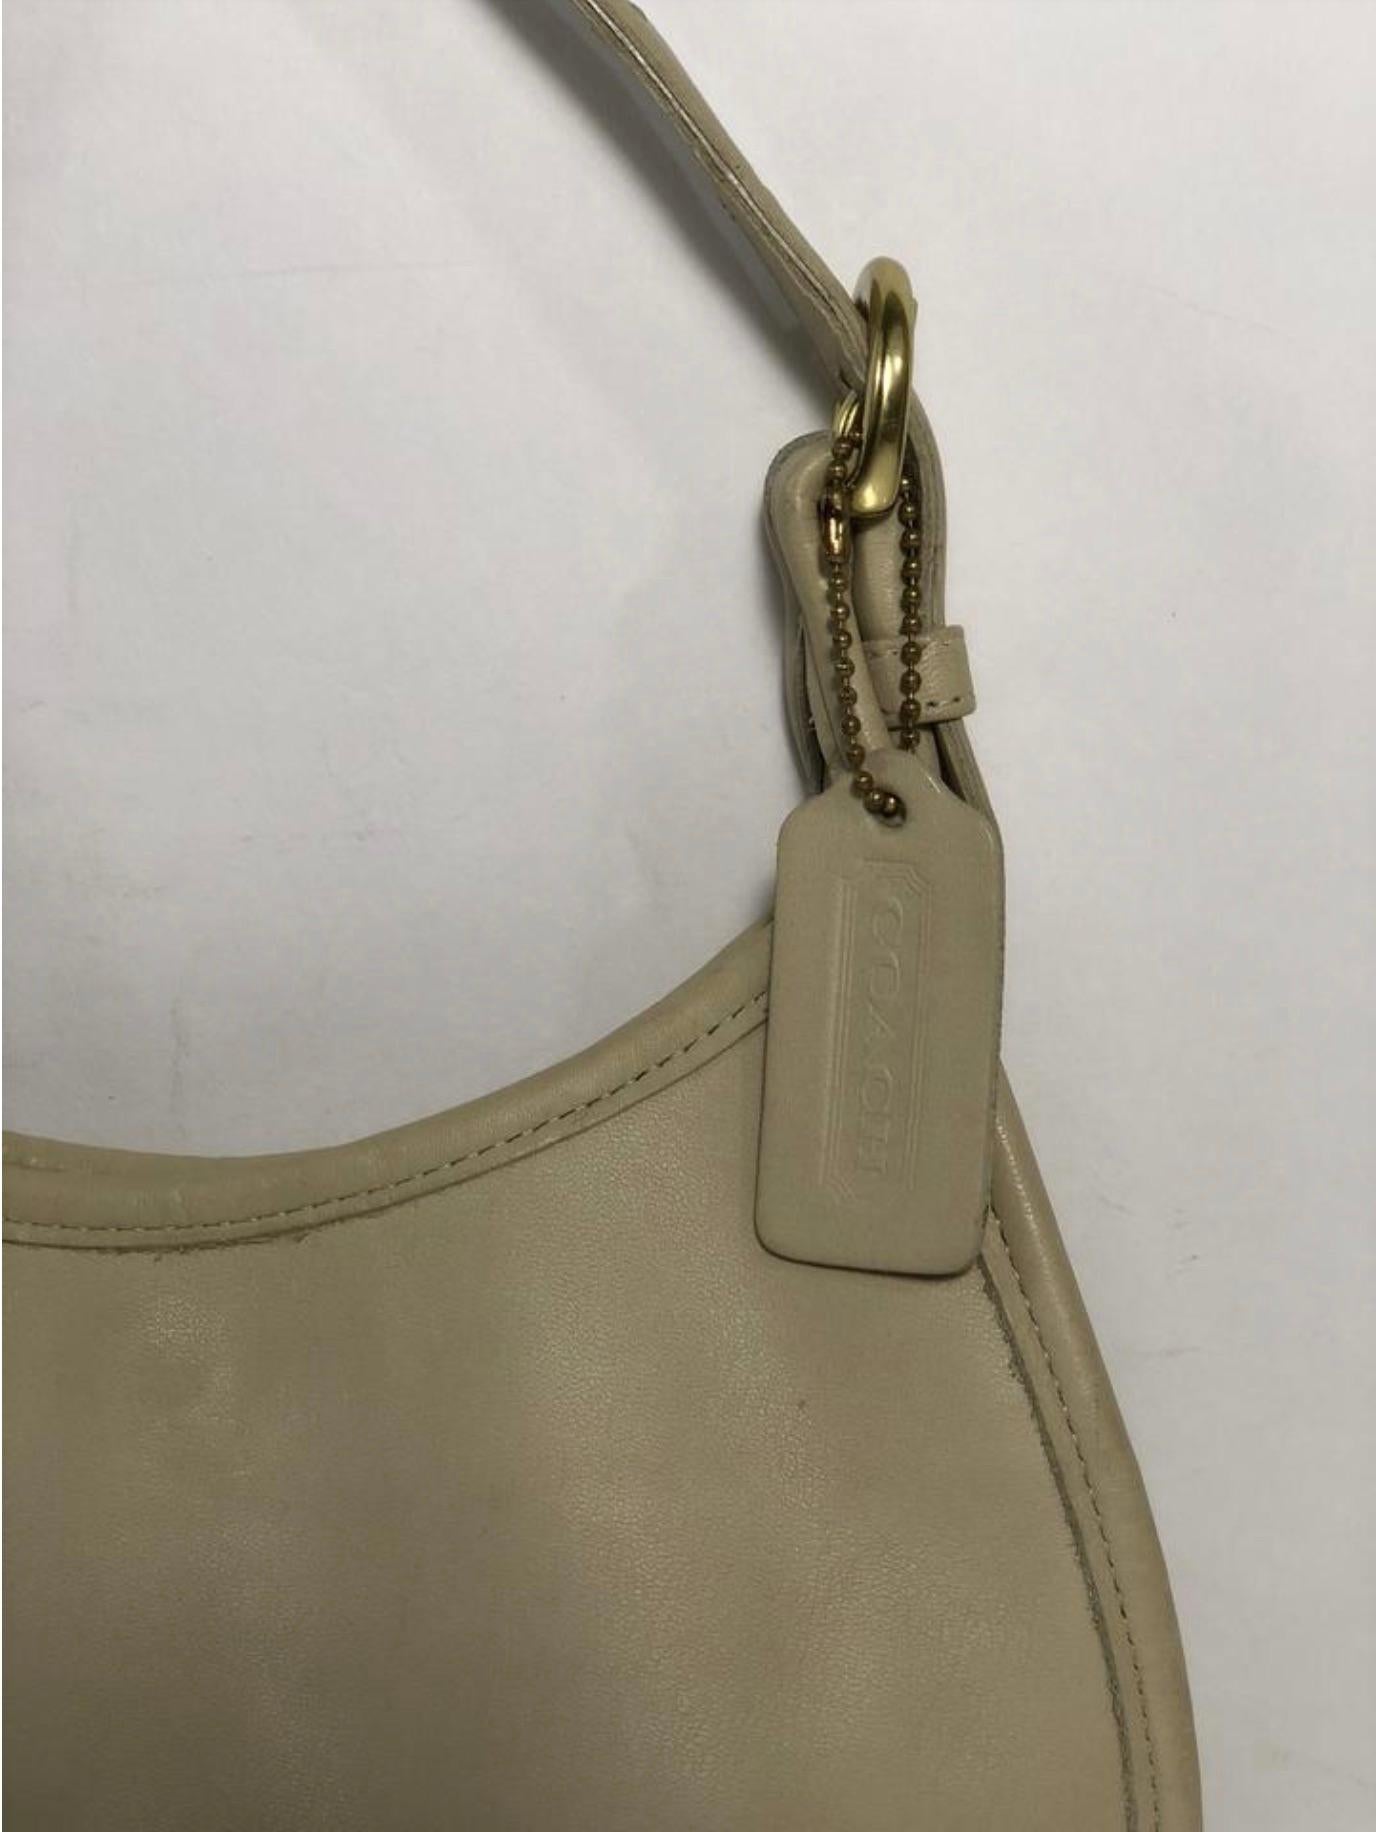 MODEL - Coach Vintage Mini Soho Shoulder Handbag

CONDITION - Exceptional! No signs of wear.

SKU - AIS-WOFS-8

ORIGINAL/CURRENT RETAIL PRICE - 195 + tax

DATE/SERIAL CODE - B8C-4106

DIMENSIONS - L9 x H7 x D2

STRAP/HANDLE DROP - 3.5 to